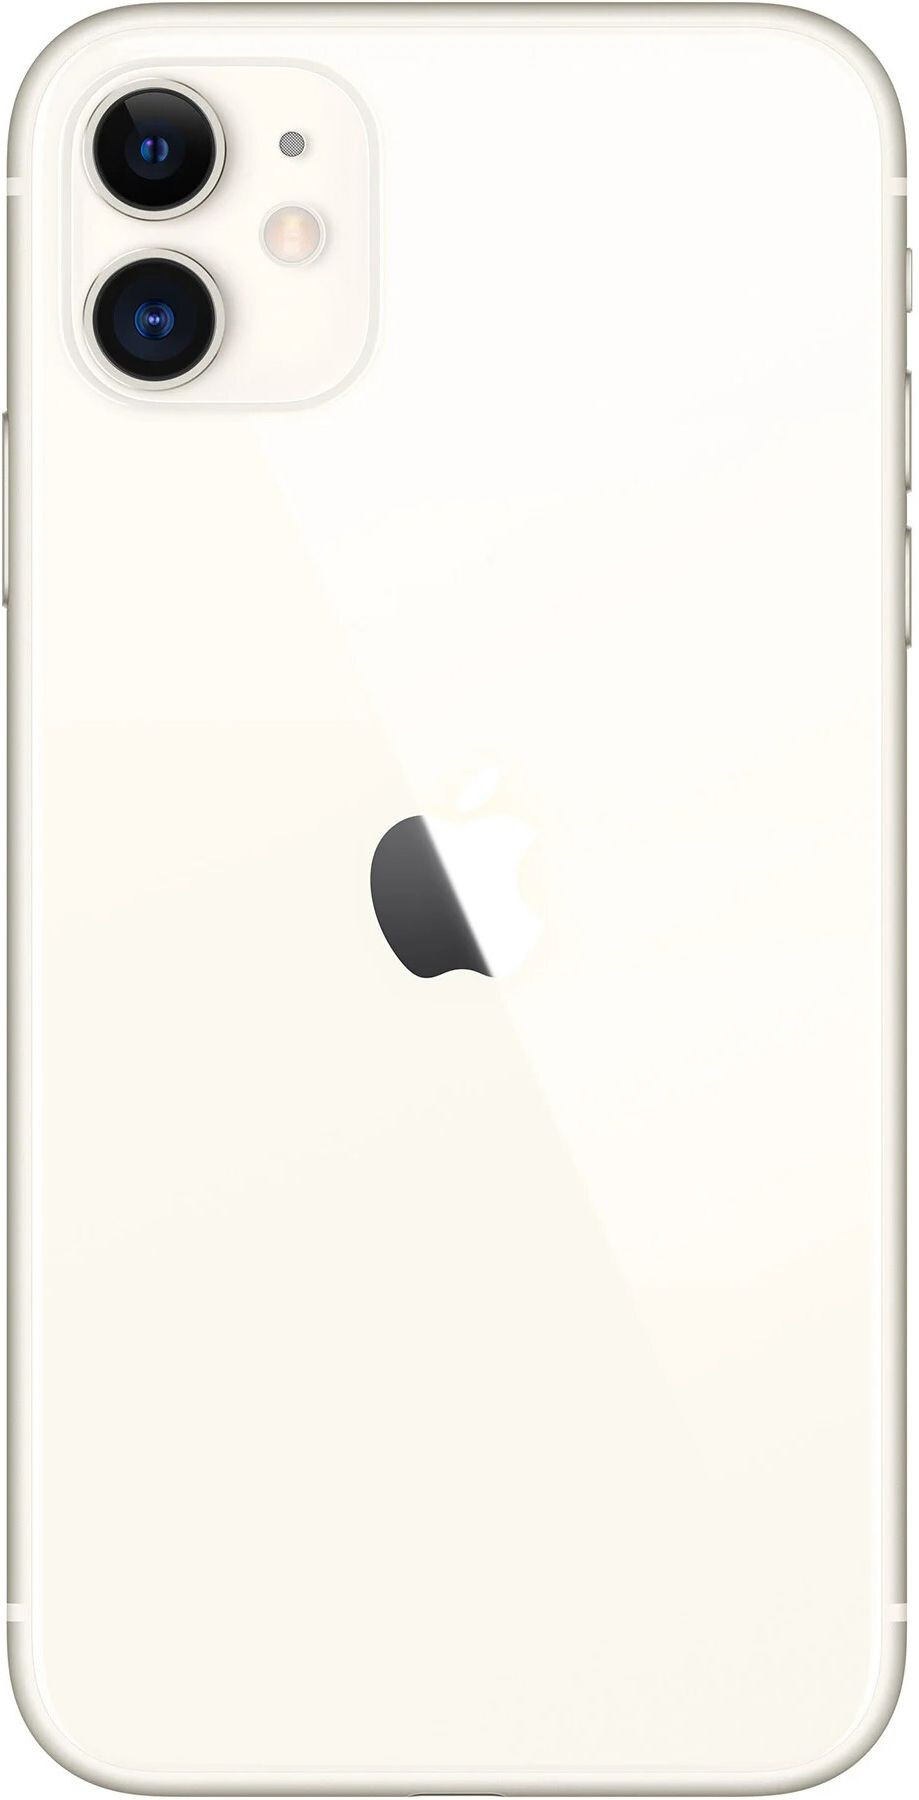 iPhone 11 128gb, White (MWLF2) Open Box